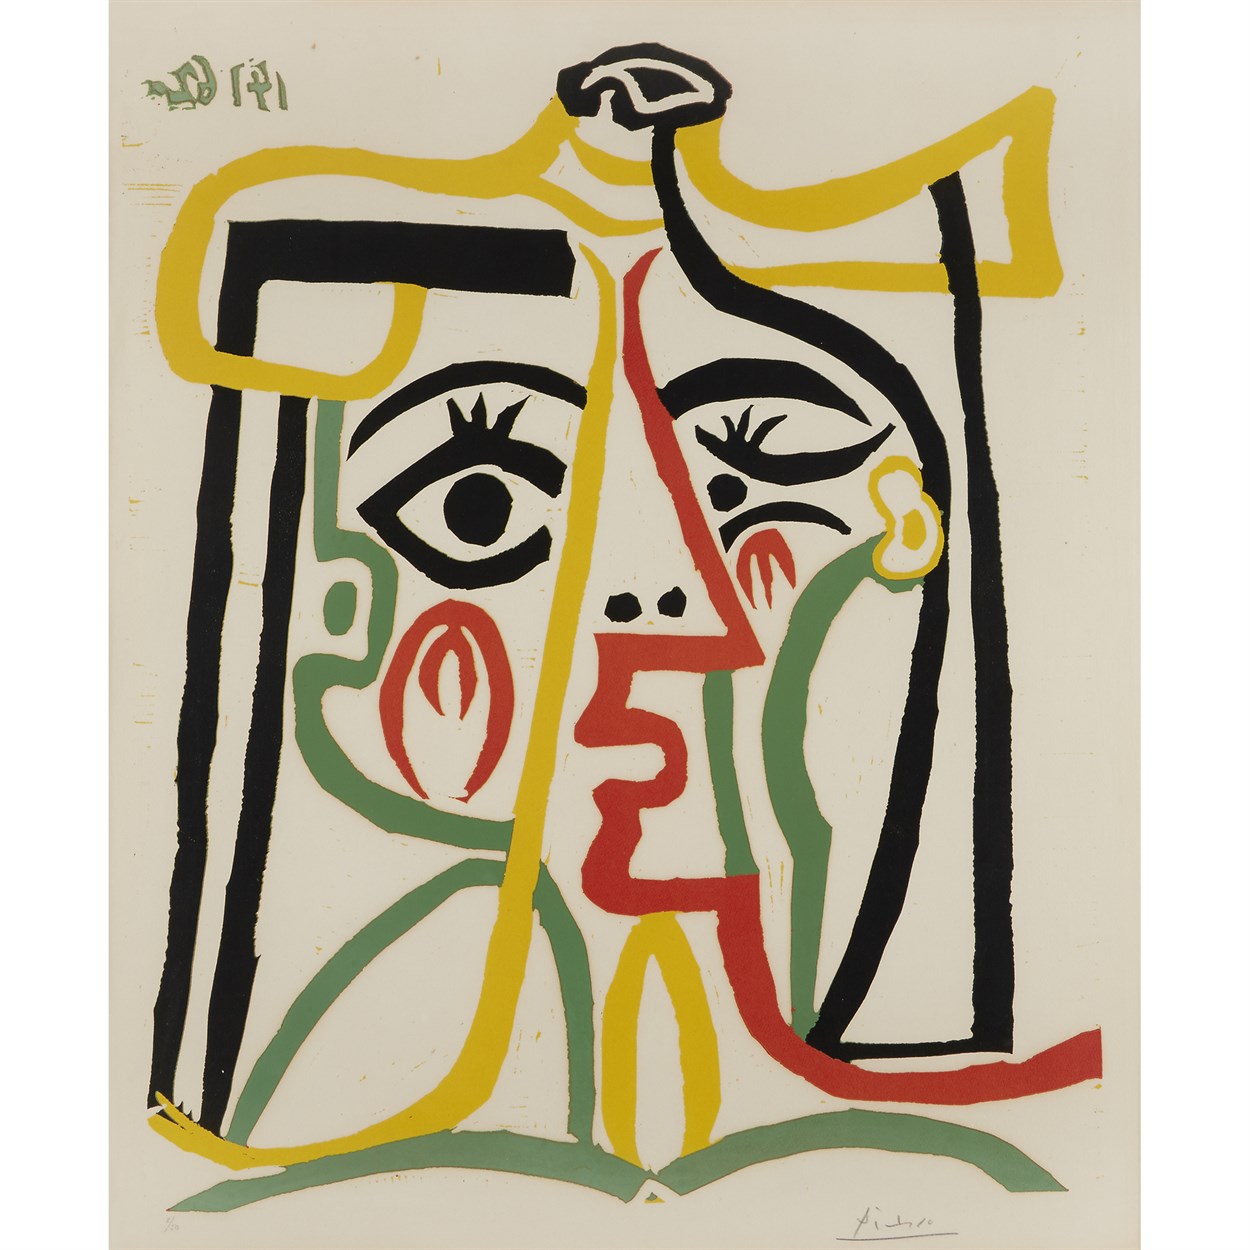 Lot 15 - Pablo Picasso  (Spanish, 1881-1973)